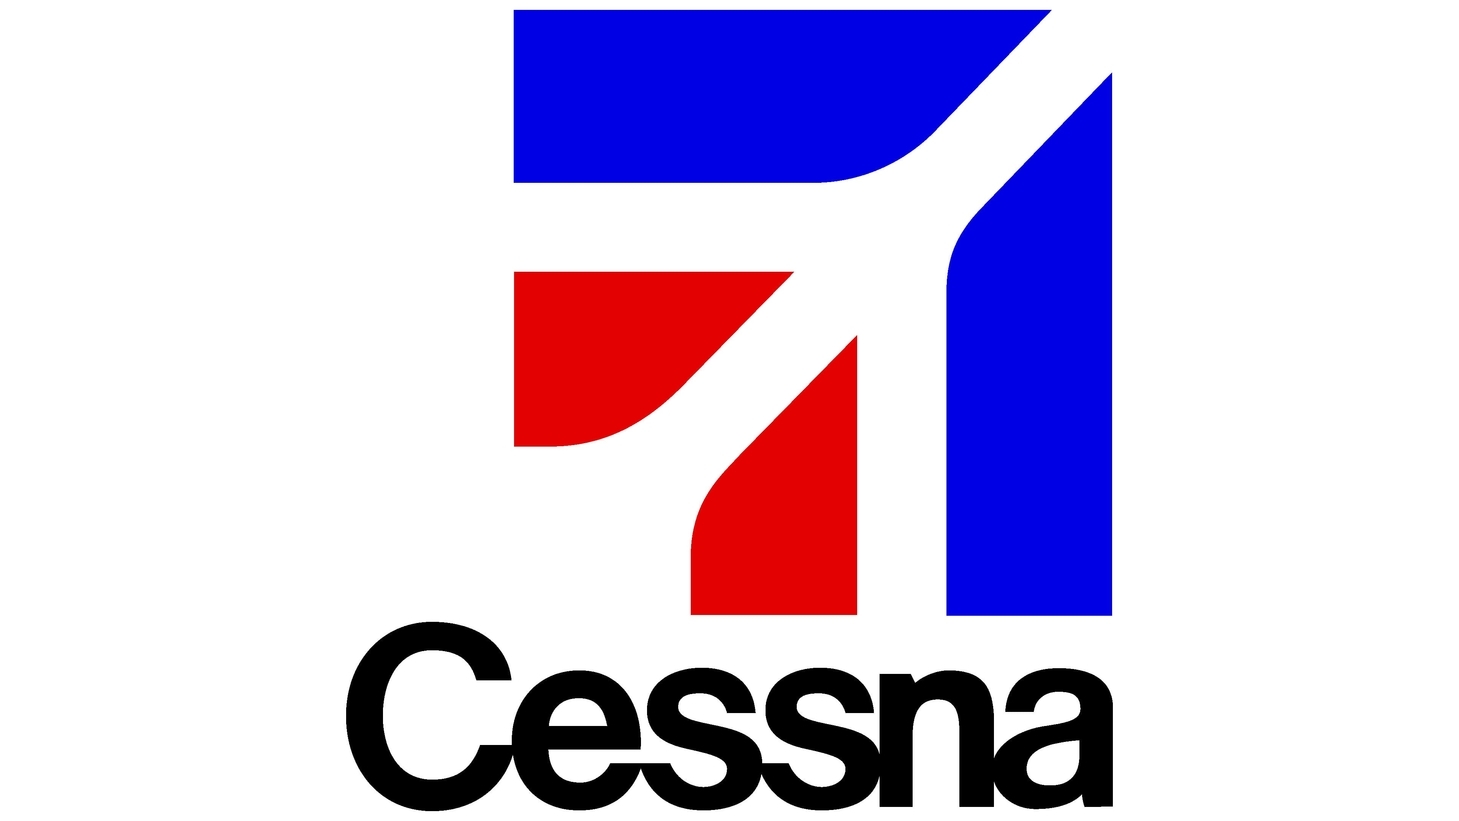 Cessna sign